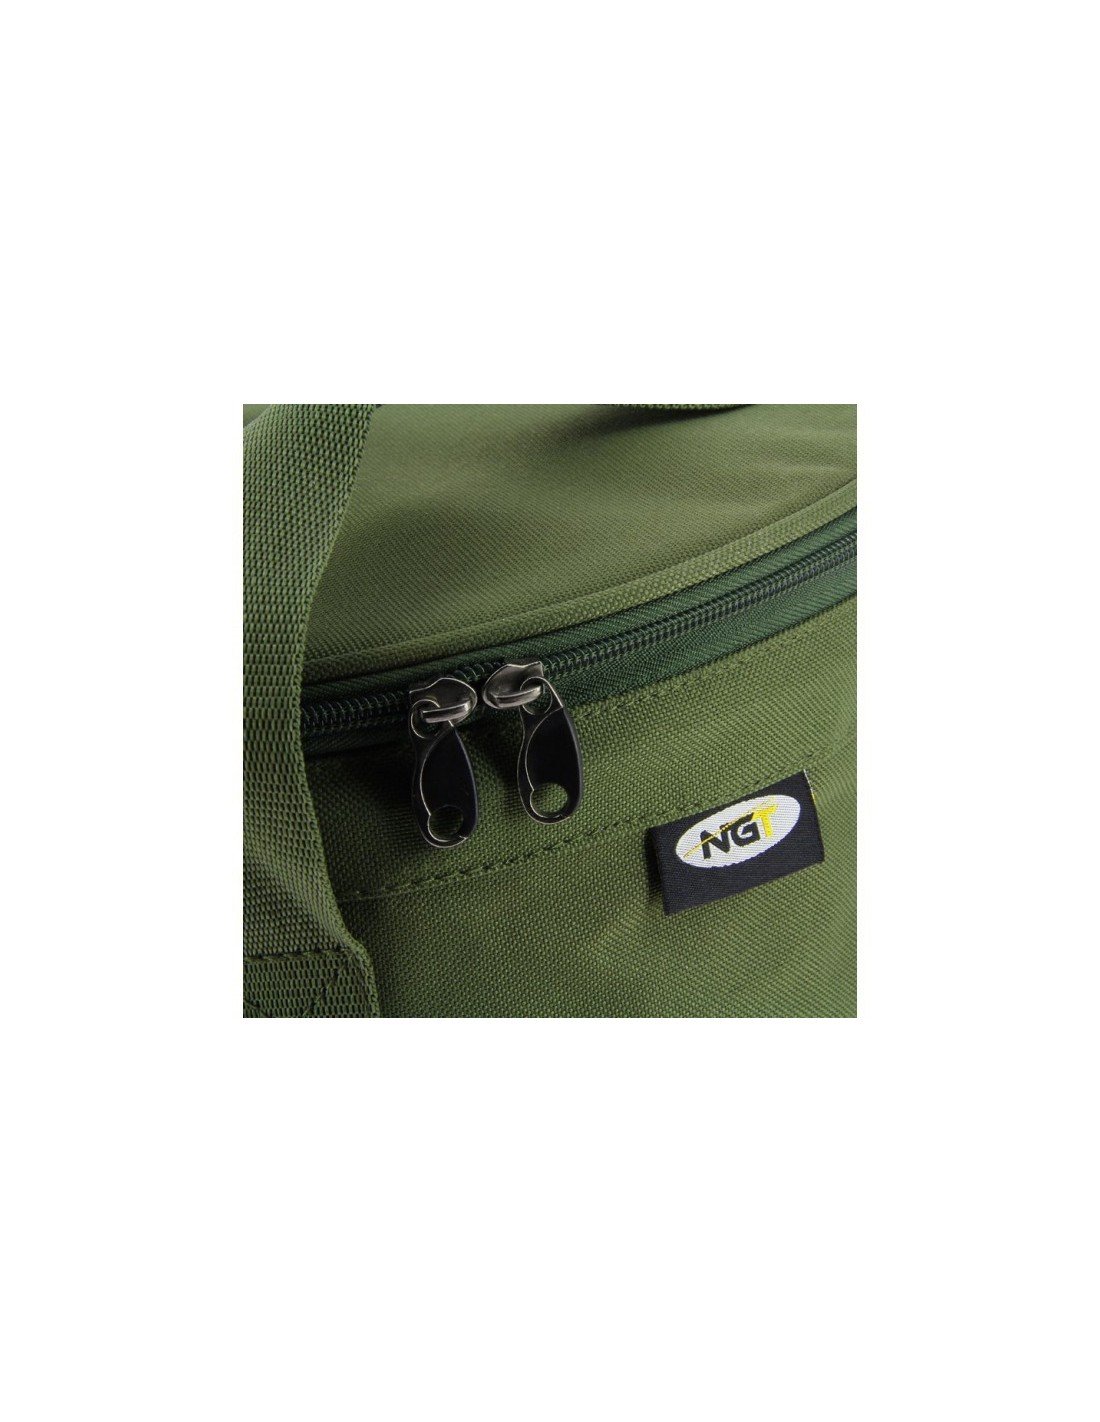 NGT Bait Bin Bag with Handles - 325 чанта за стръв